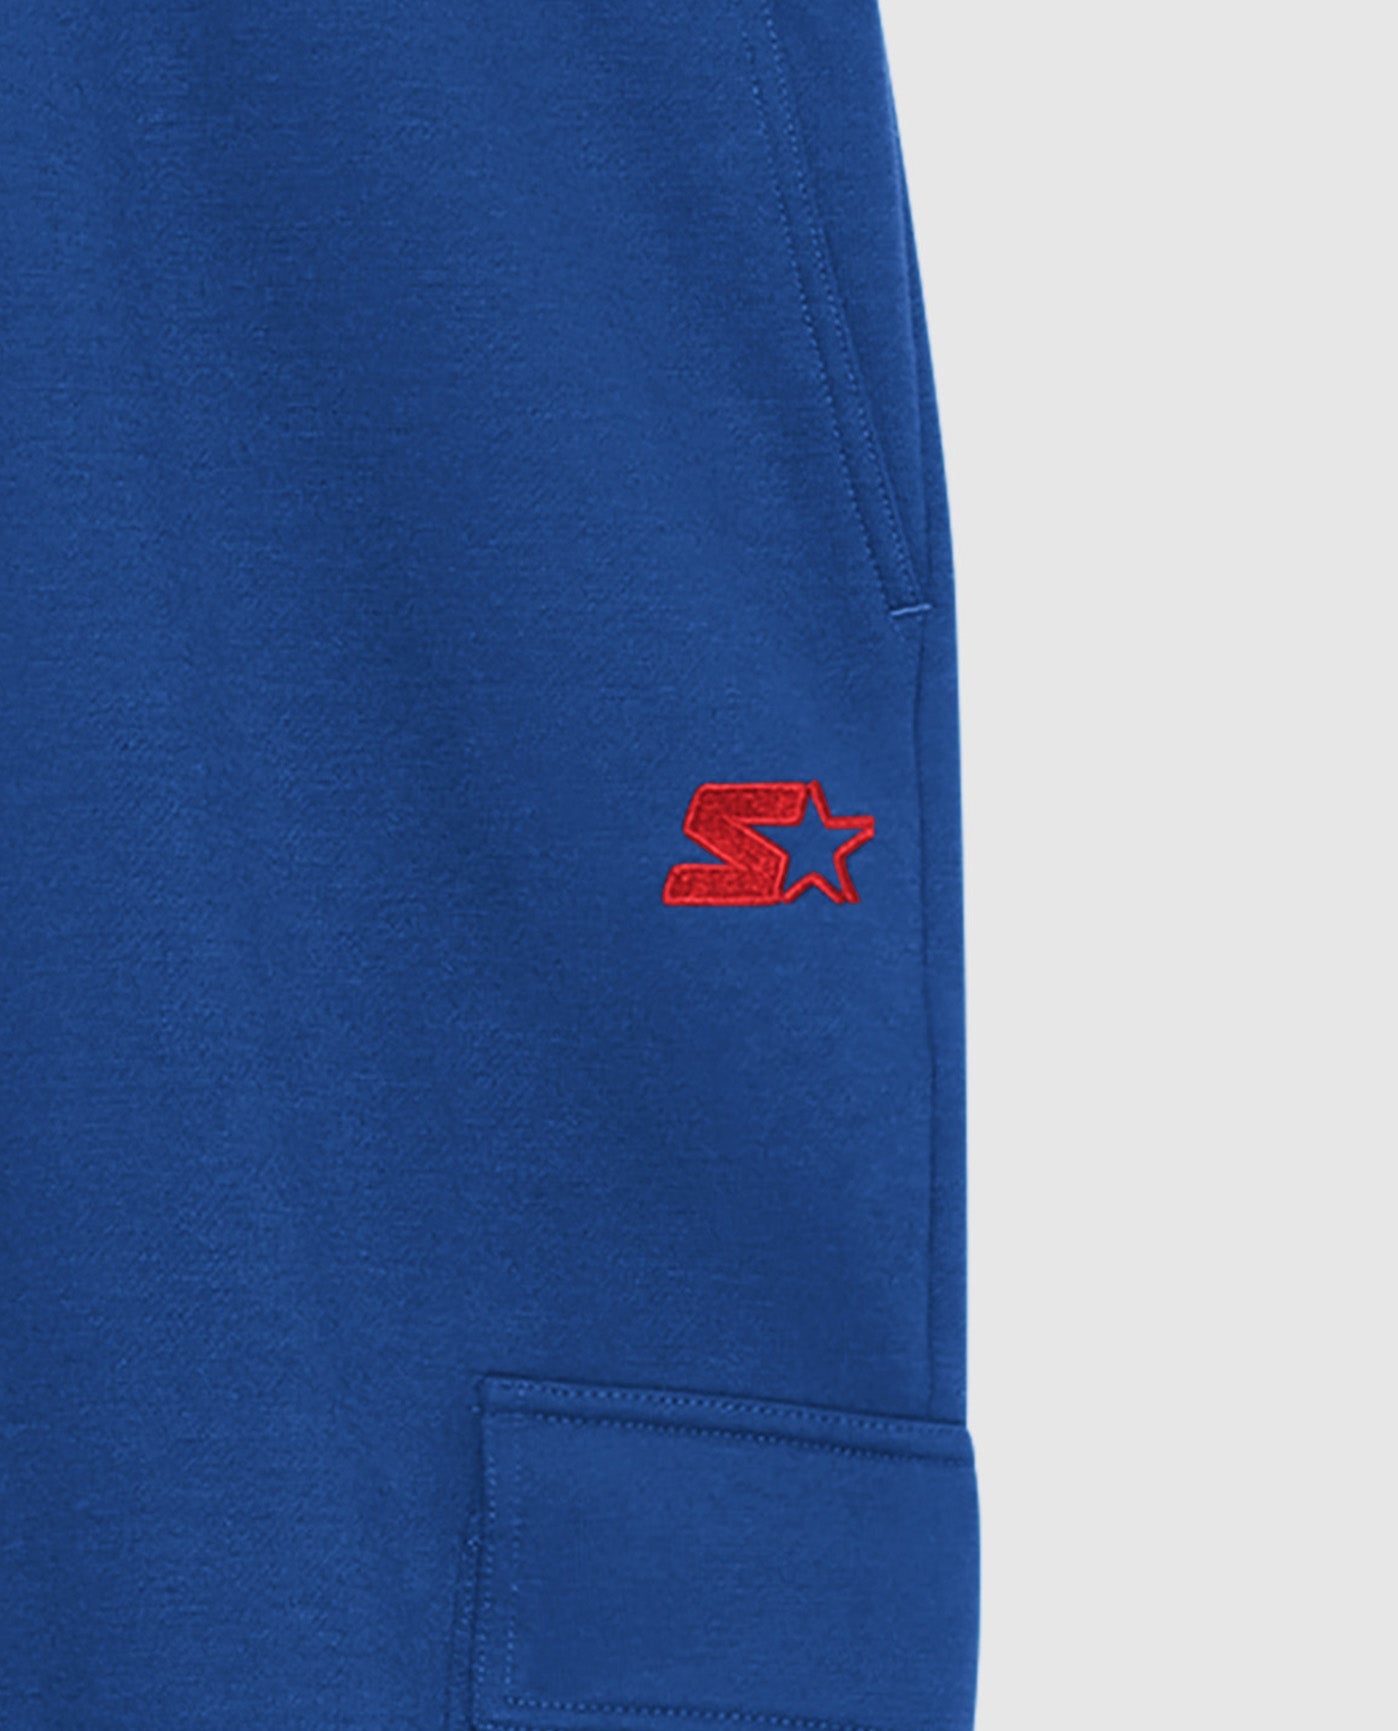 Embroidered Starter Logo on Starter Kyle Jogger with Cargo Pockets Royal Blue | Royal Blue